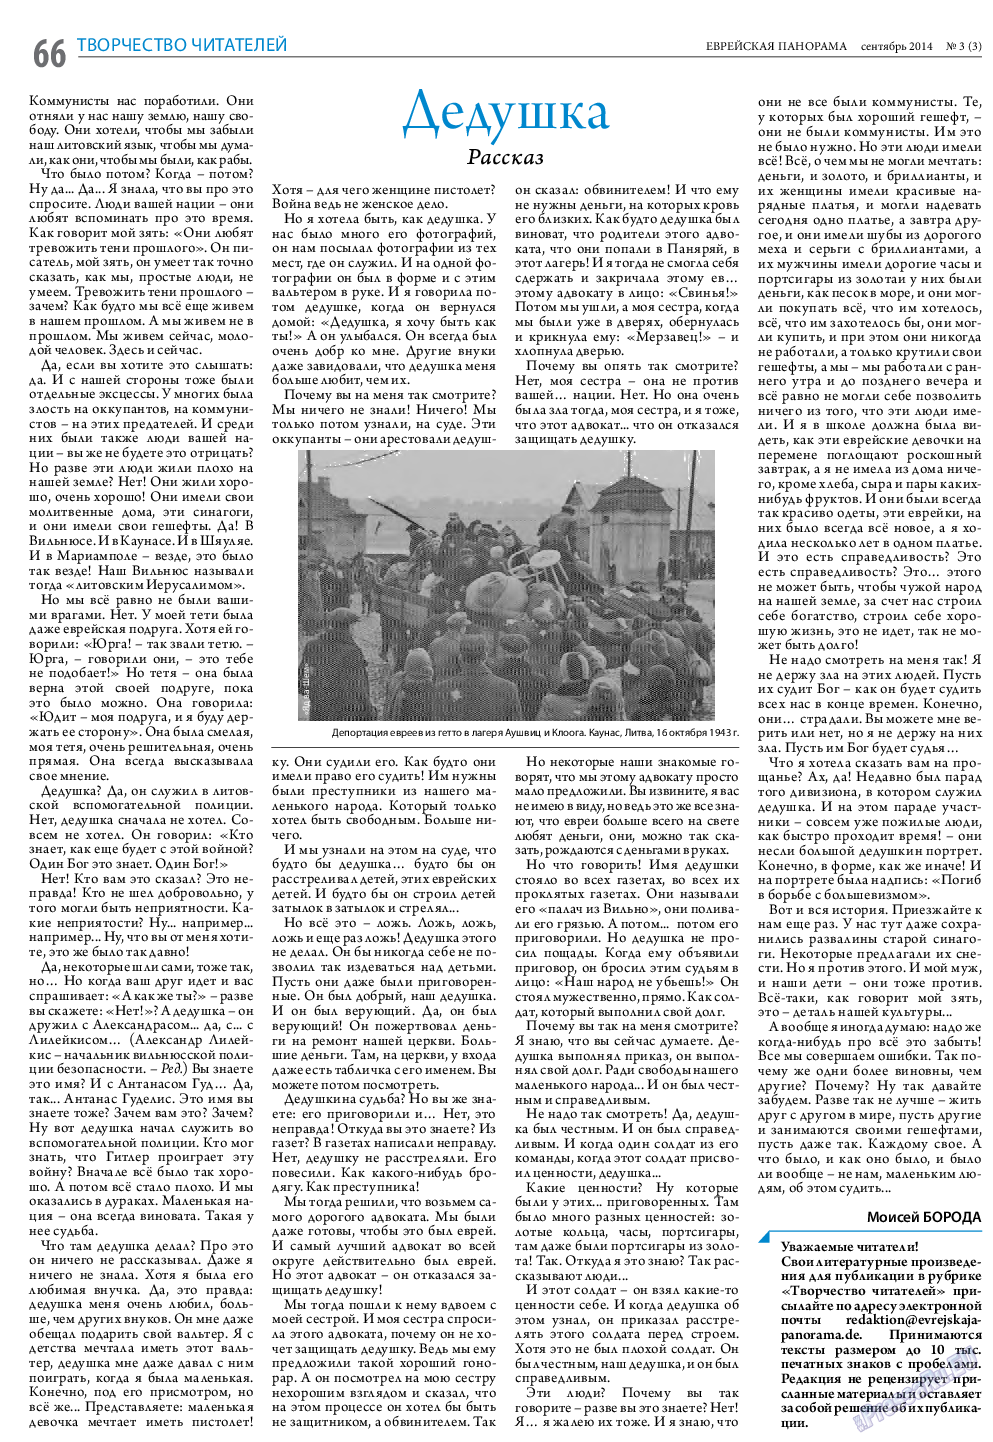 Еврейская панорама, газета. 2014 №3 стр.66